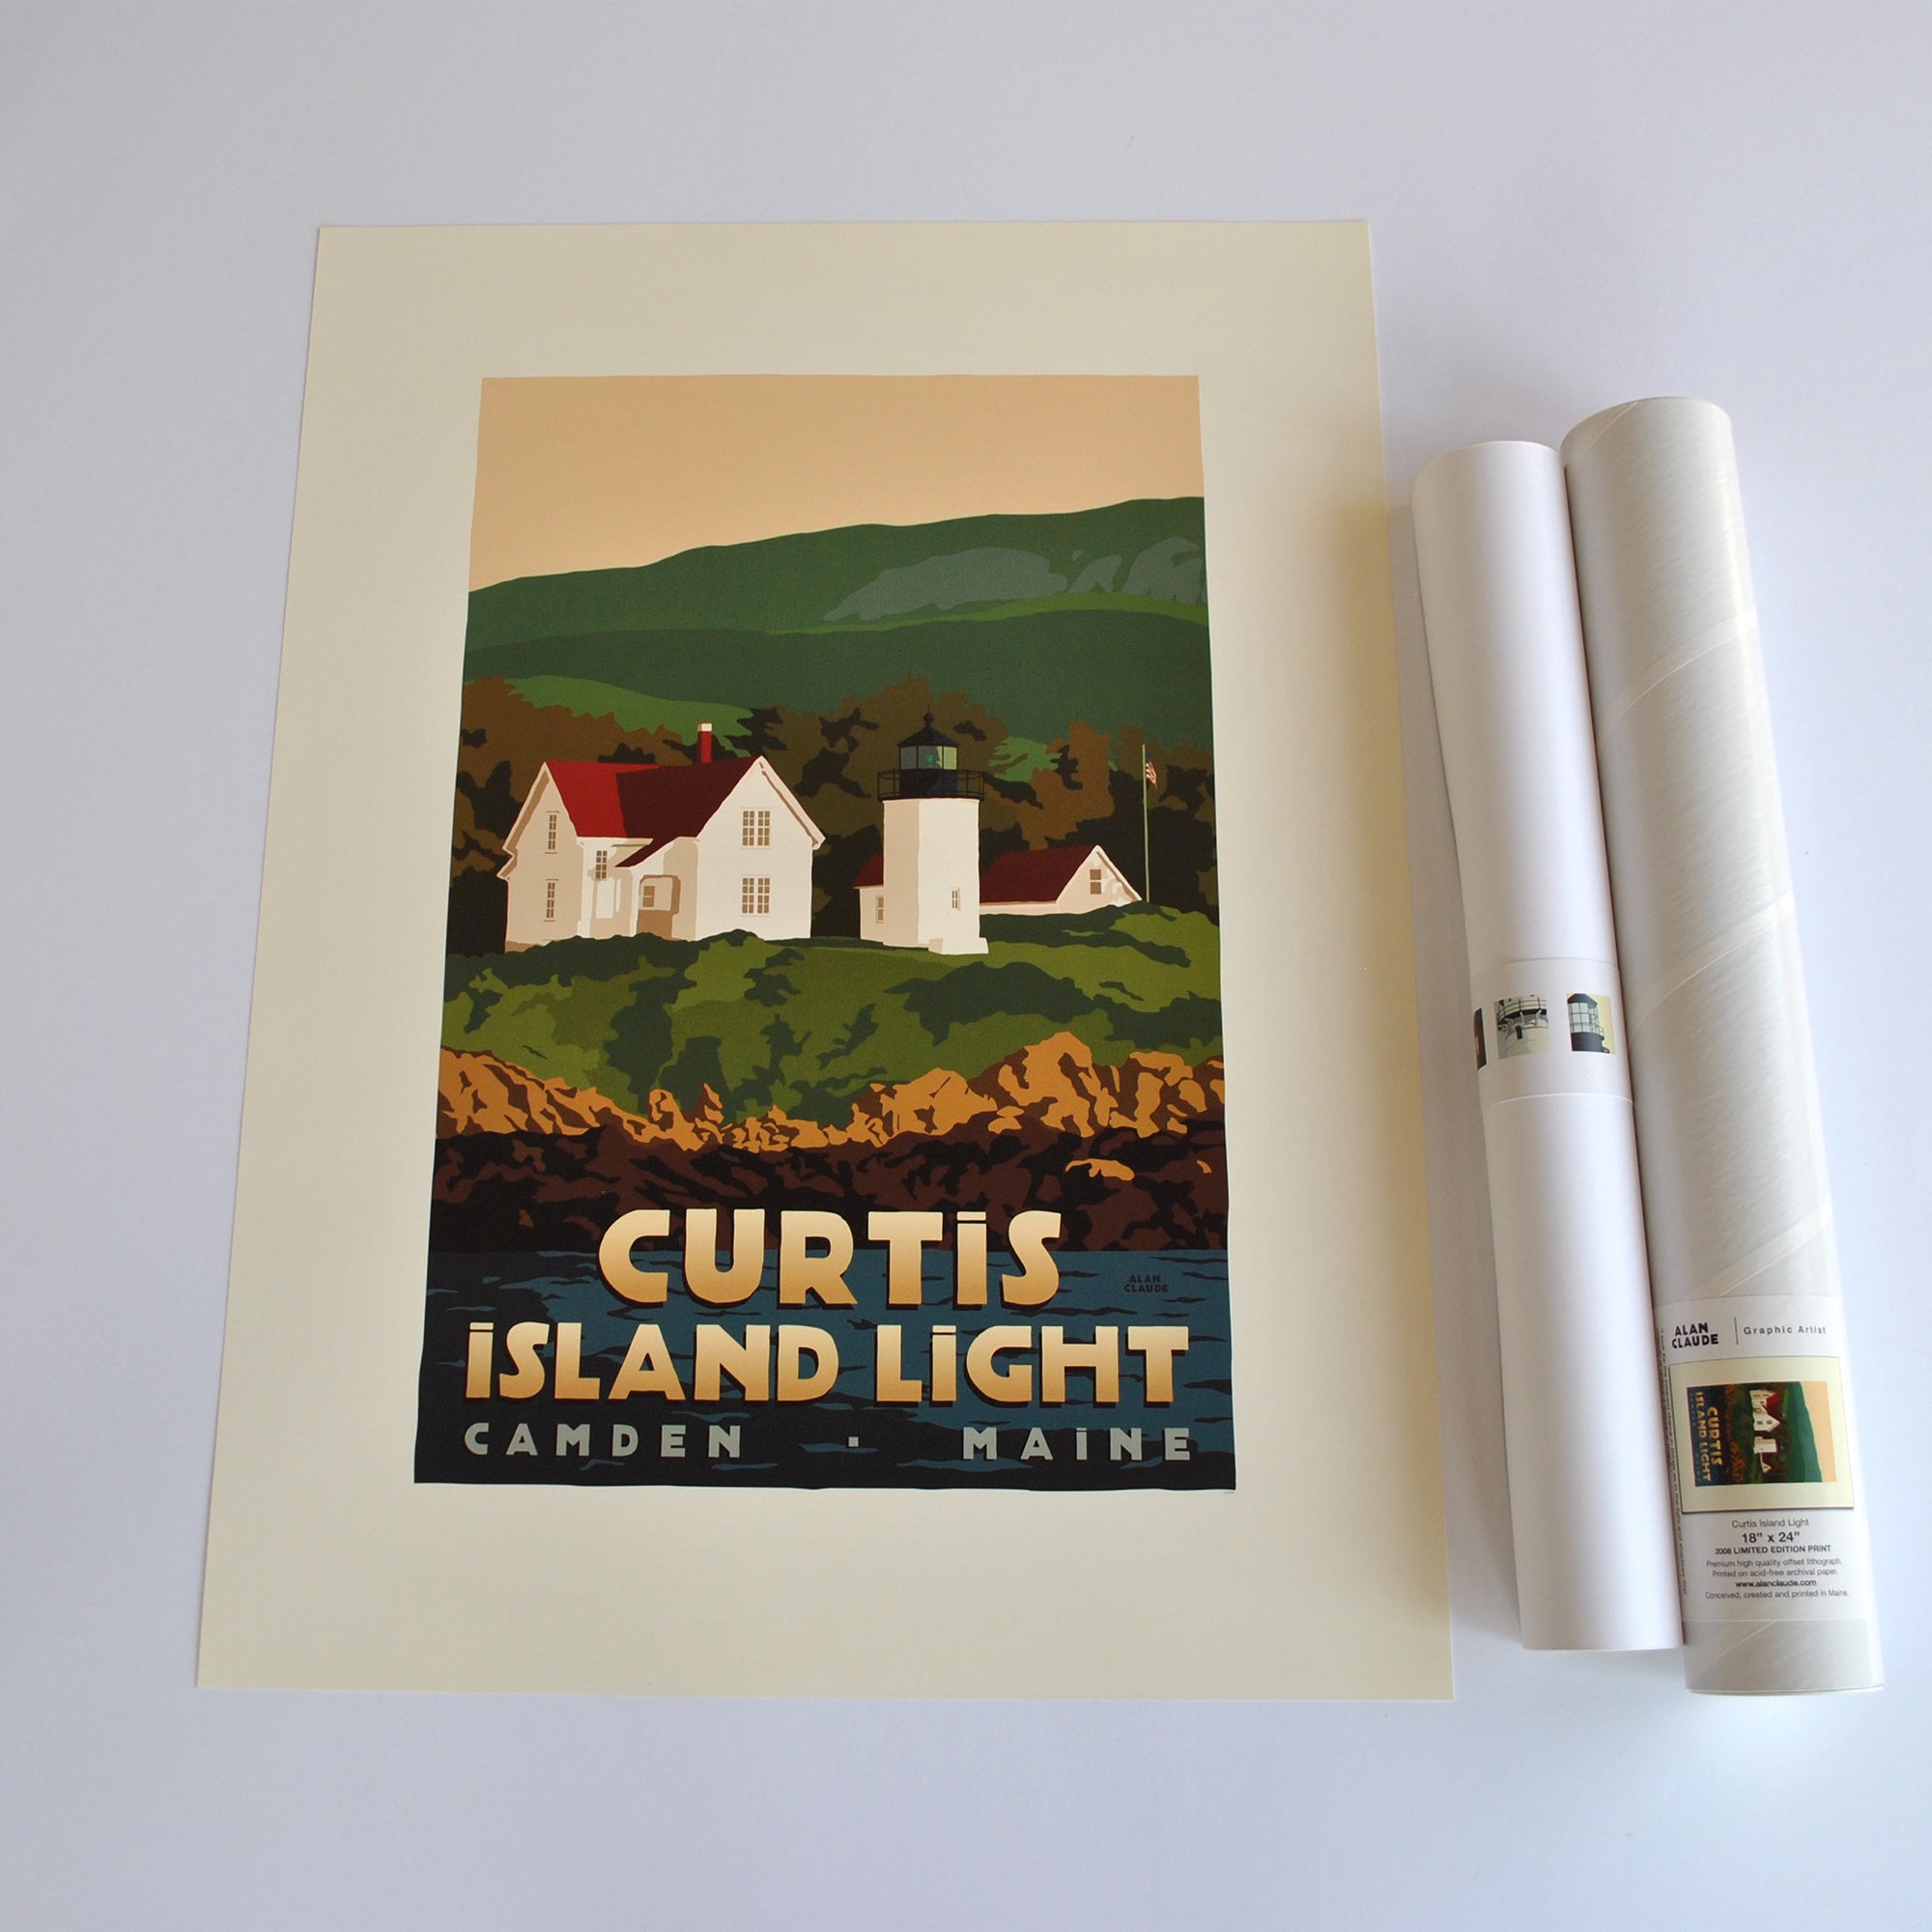 Curtis Island Light Art Print 18" x 24" Travel Poster - Maine